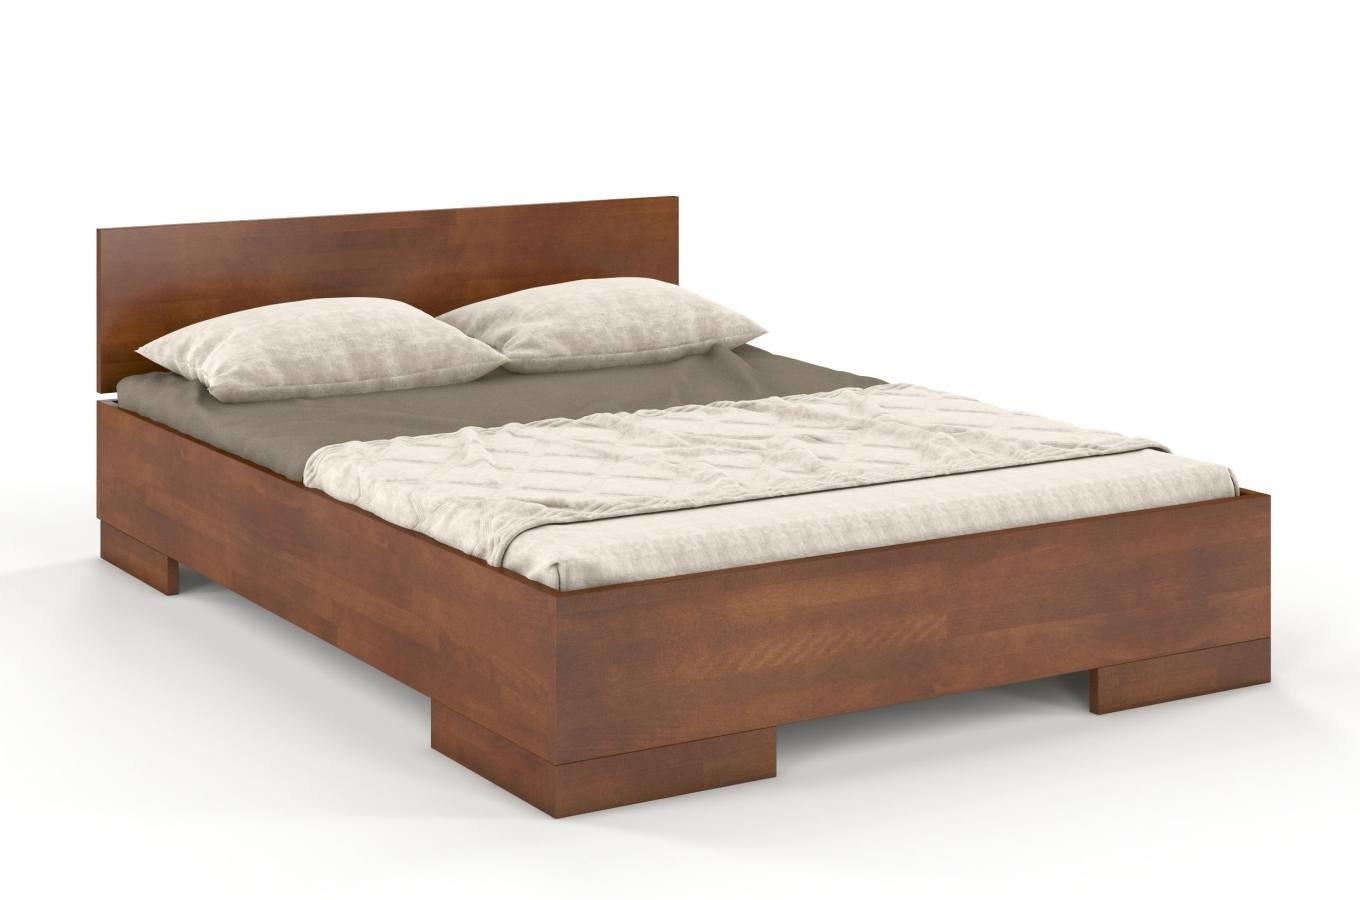 Łóżko drewniane bukowe Skandica SPECTRUM Maxi / 120x200 cm, kolor orzech